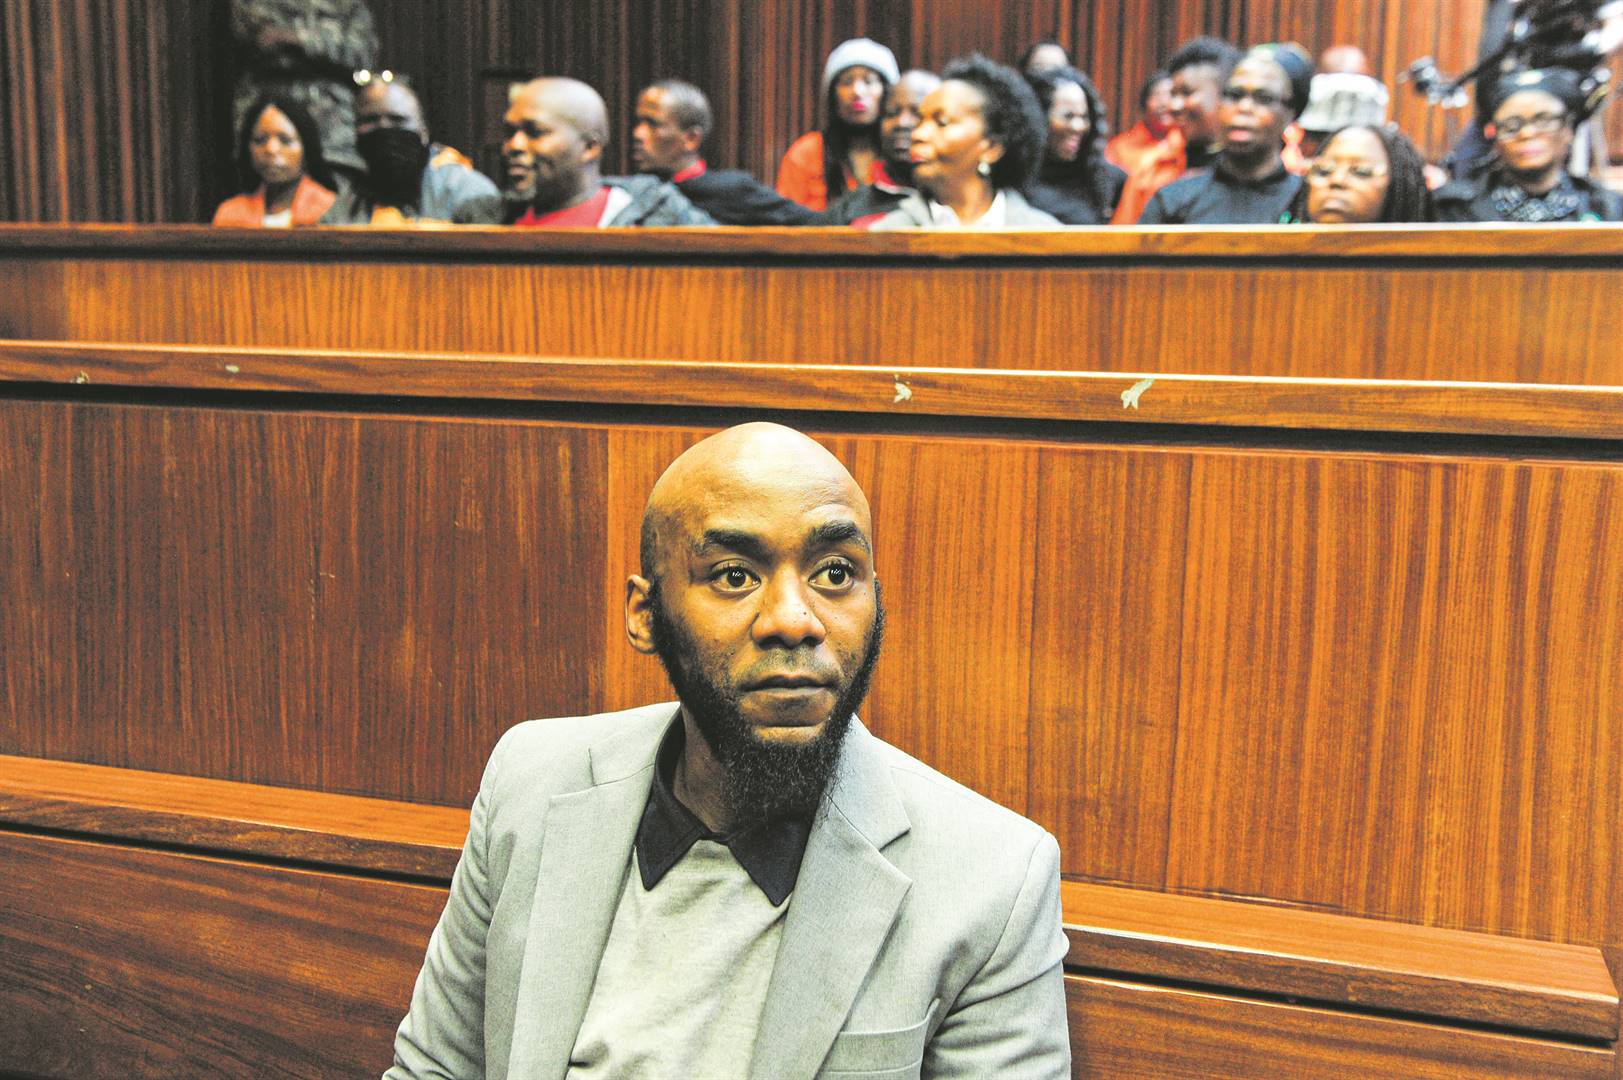 This week, Ntuthuko Shoba was sentenced to life in